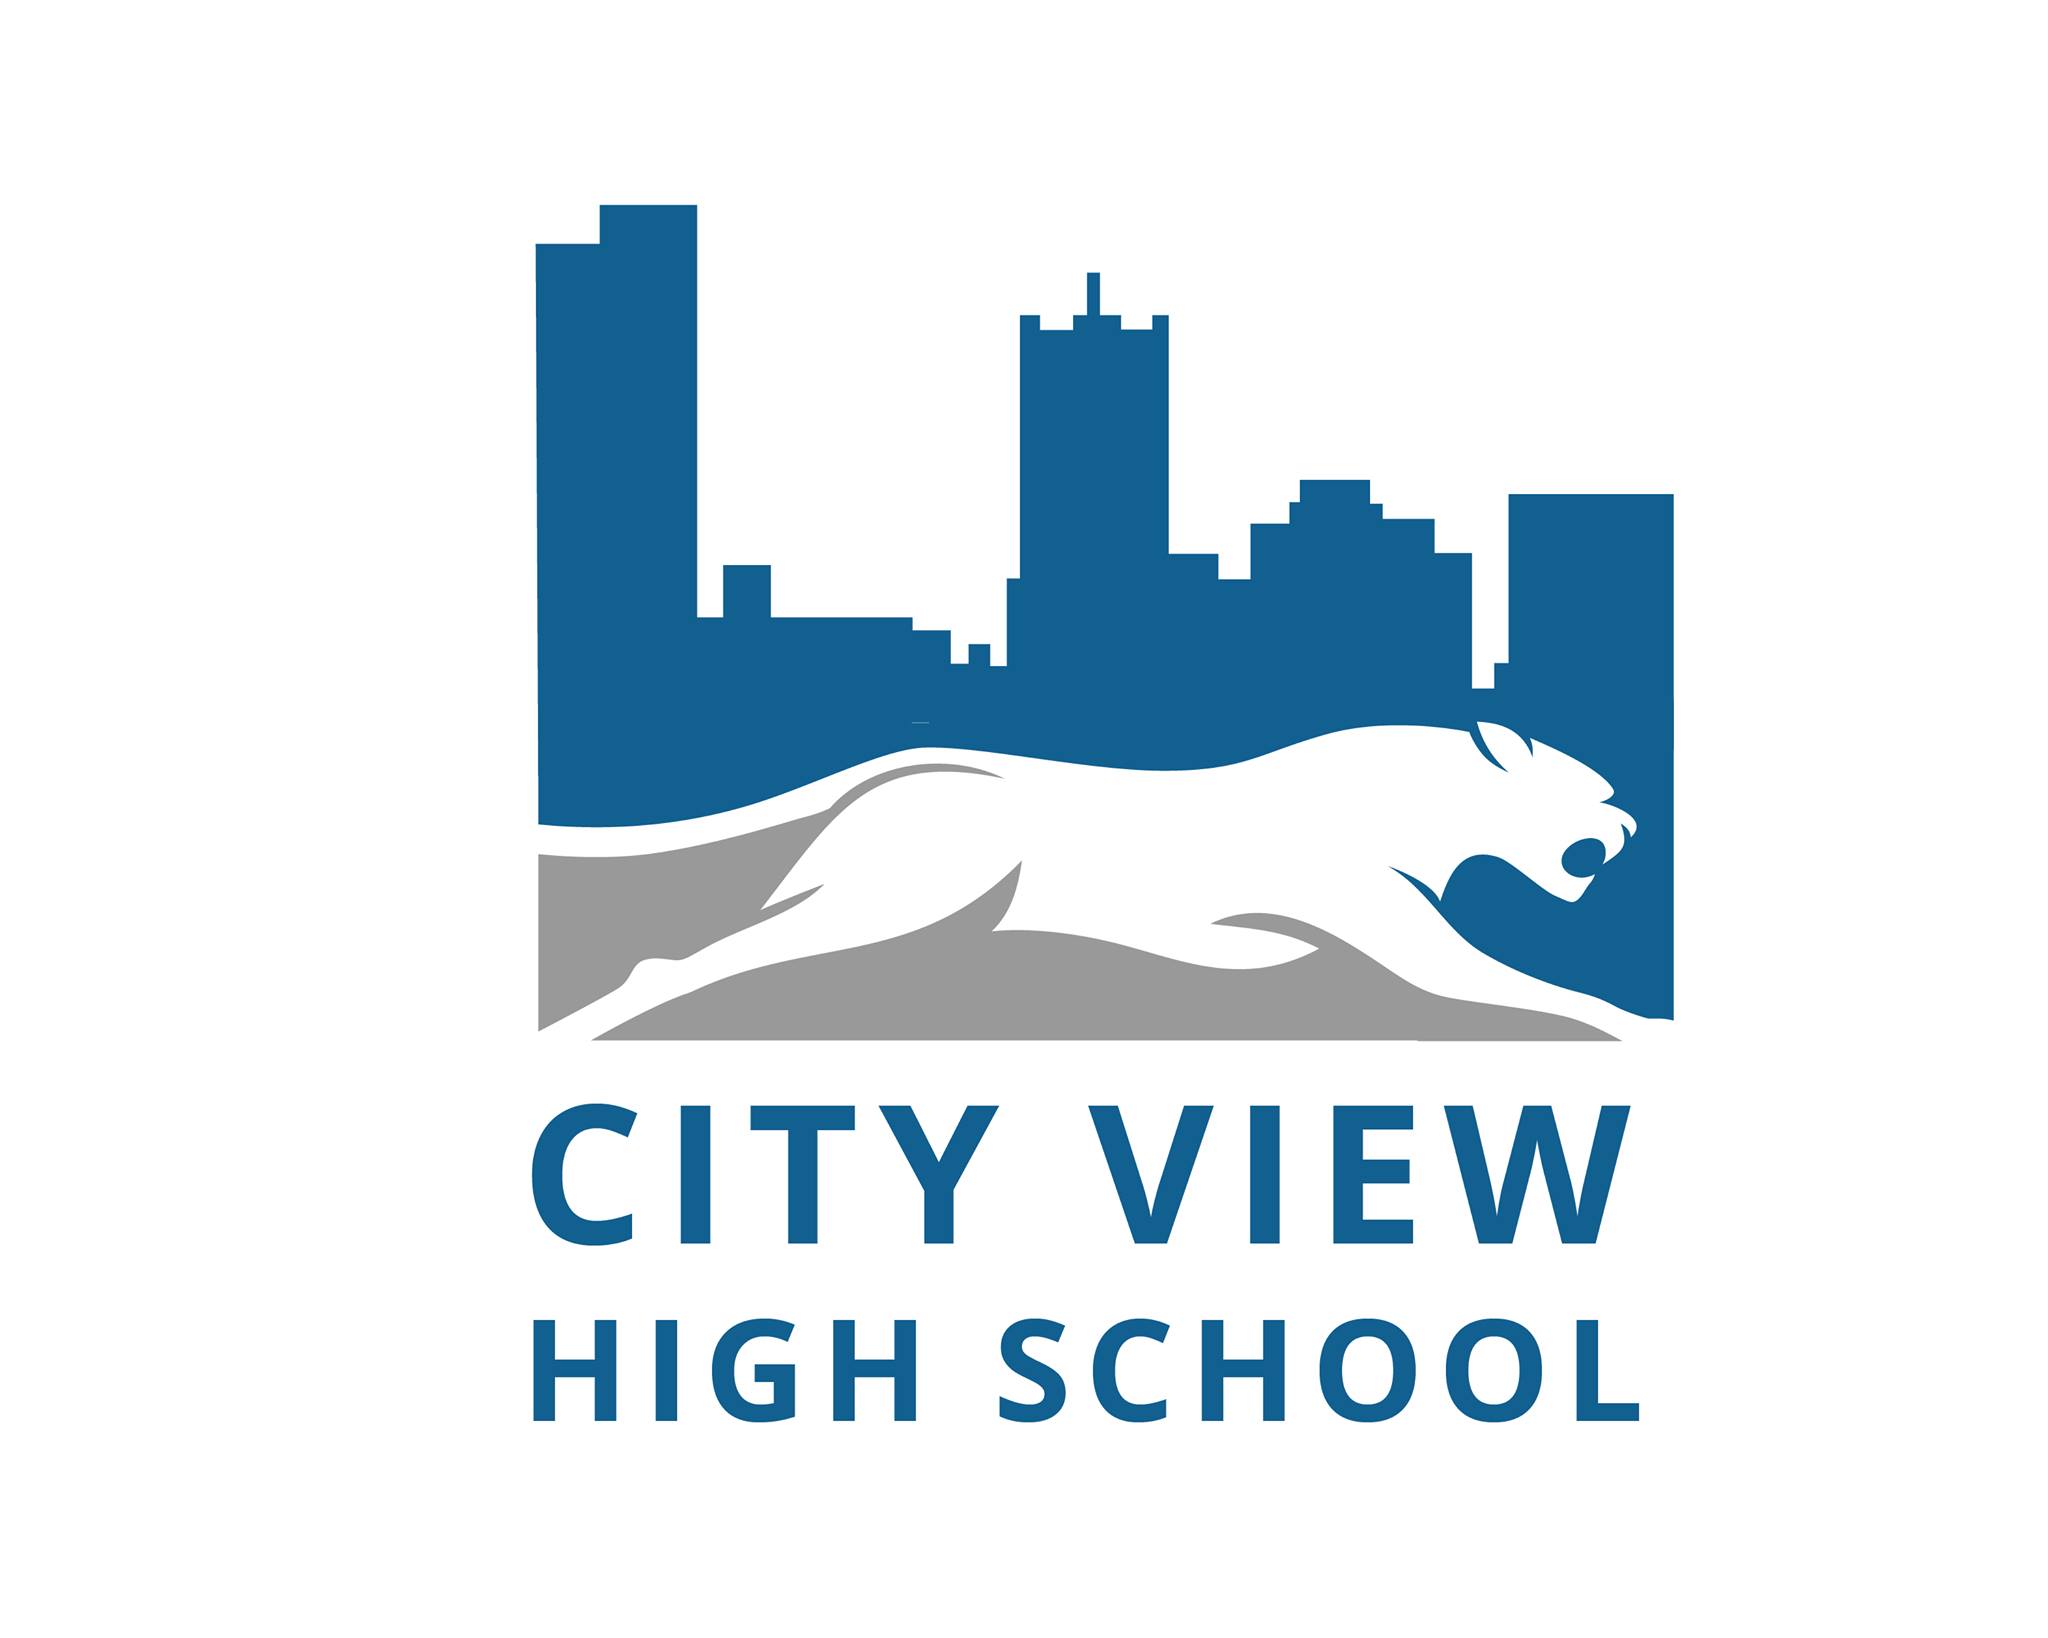 City View High School